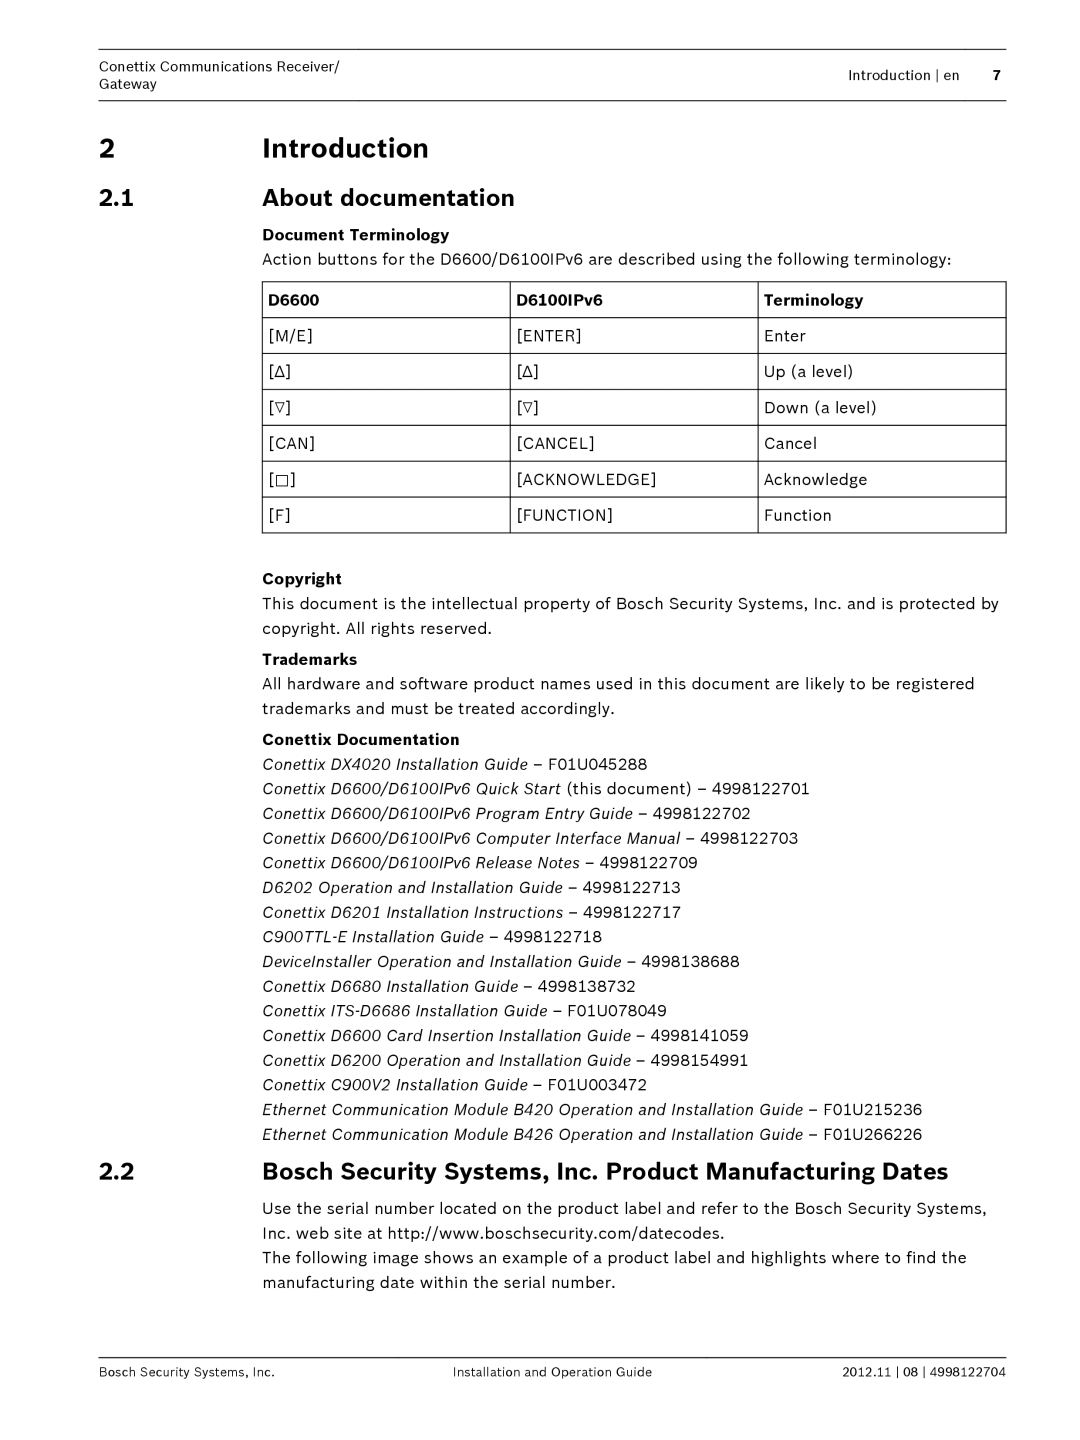 Bosch Appliances D6600 Introduction, Document Terminology, D6100IPv6, Copyright, Trademarks, Conettix Documentation 